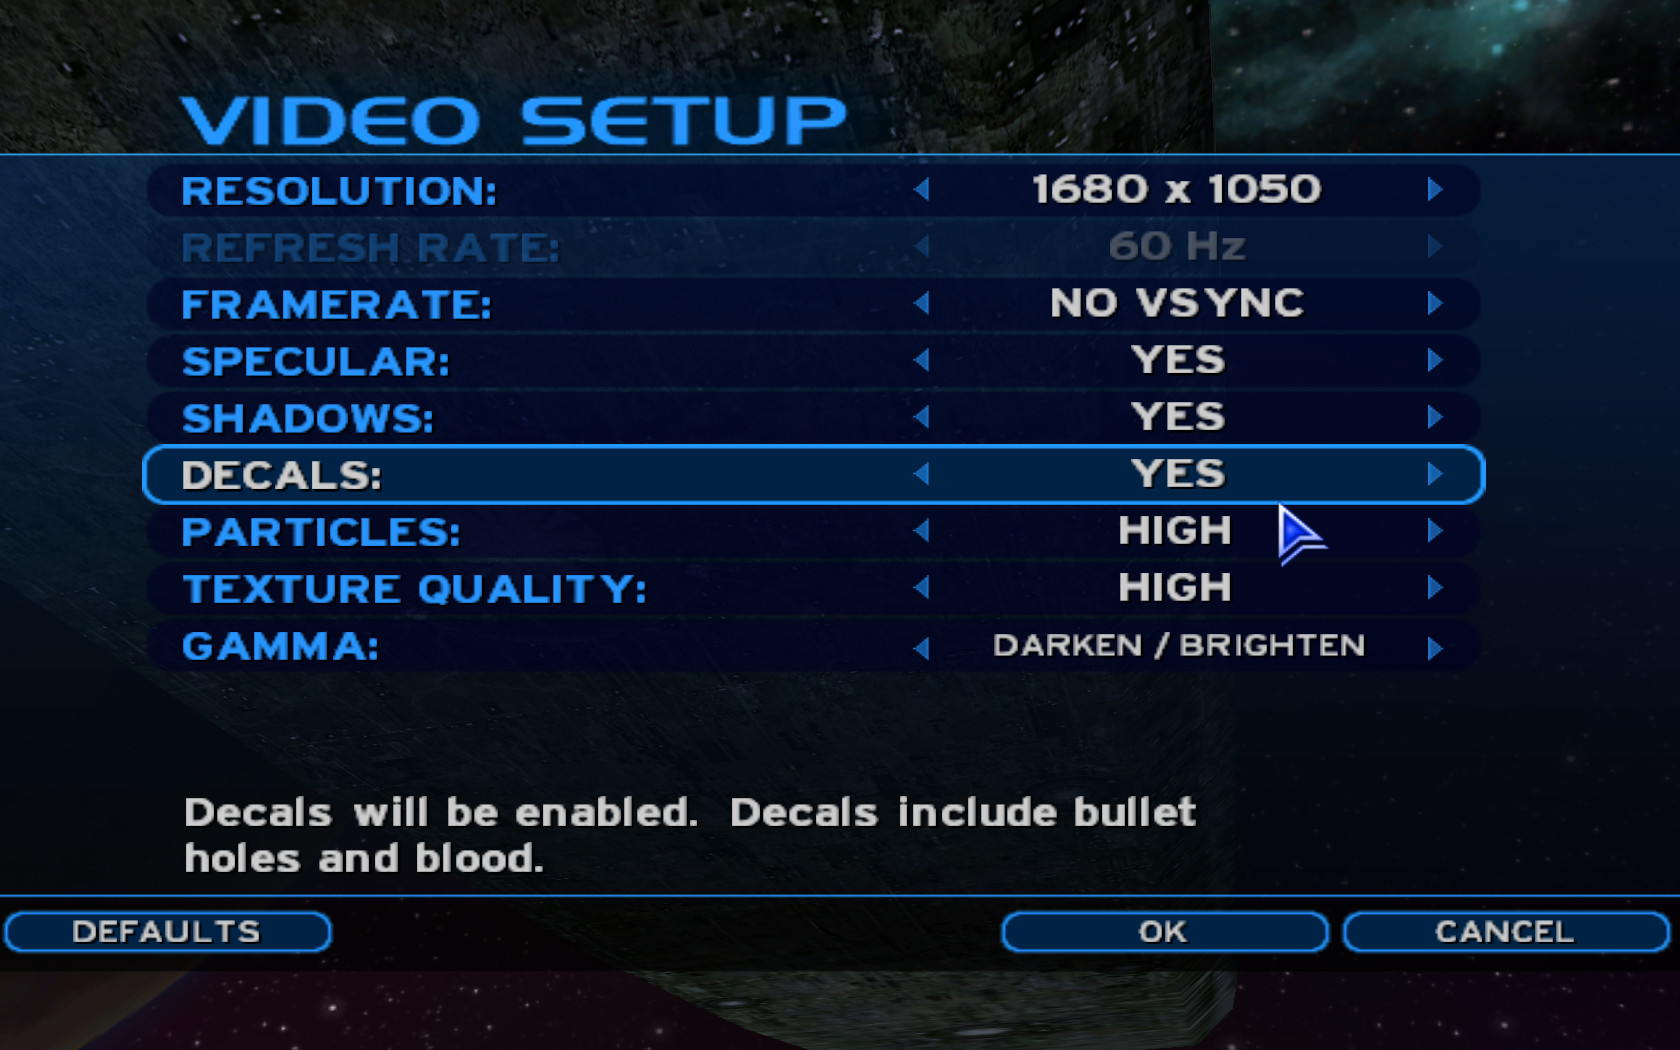 Halo's video settings menu